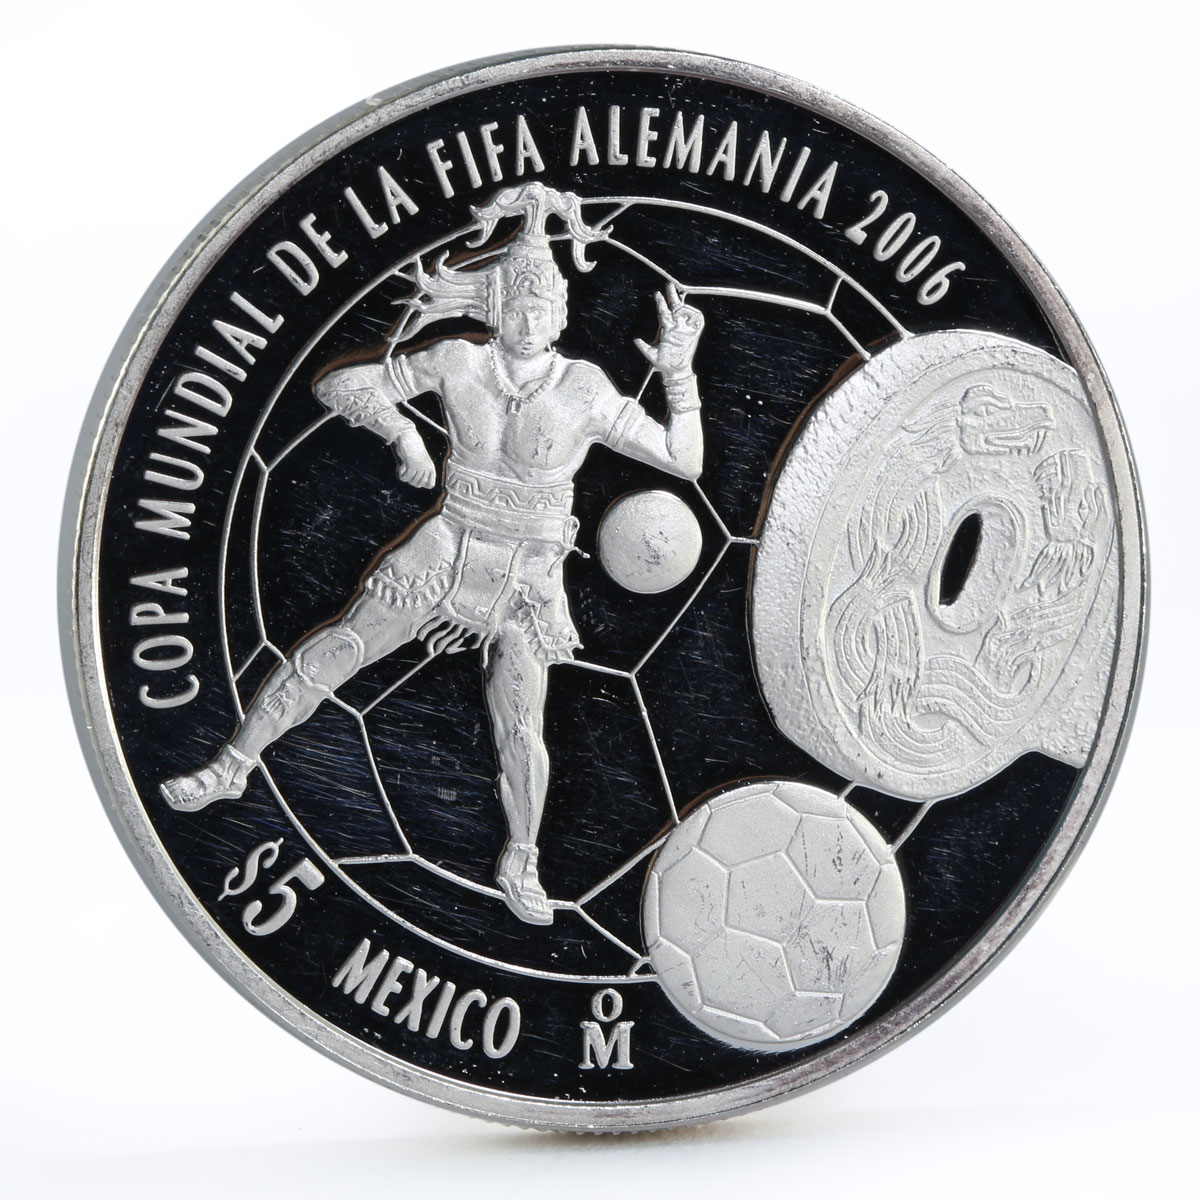 Mexico 5 pesos 2006 World Cup Soccer Games Football proof silver coin 2006